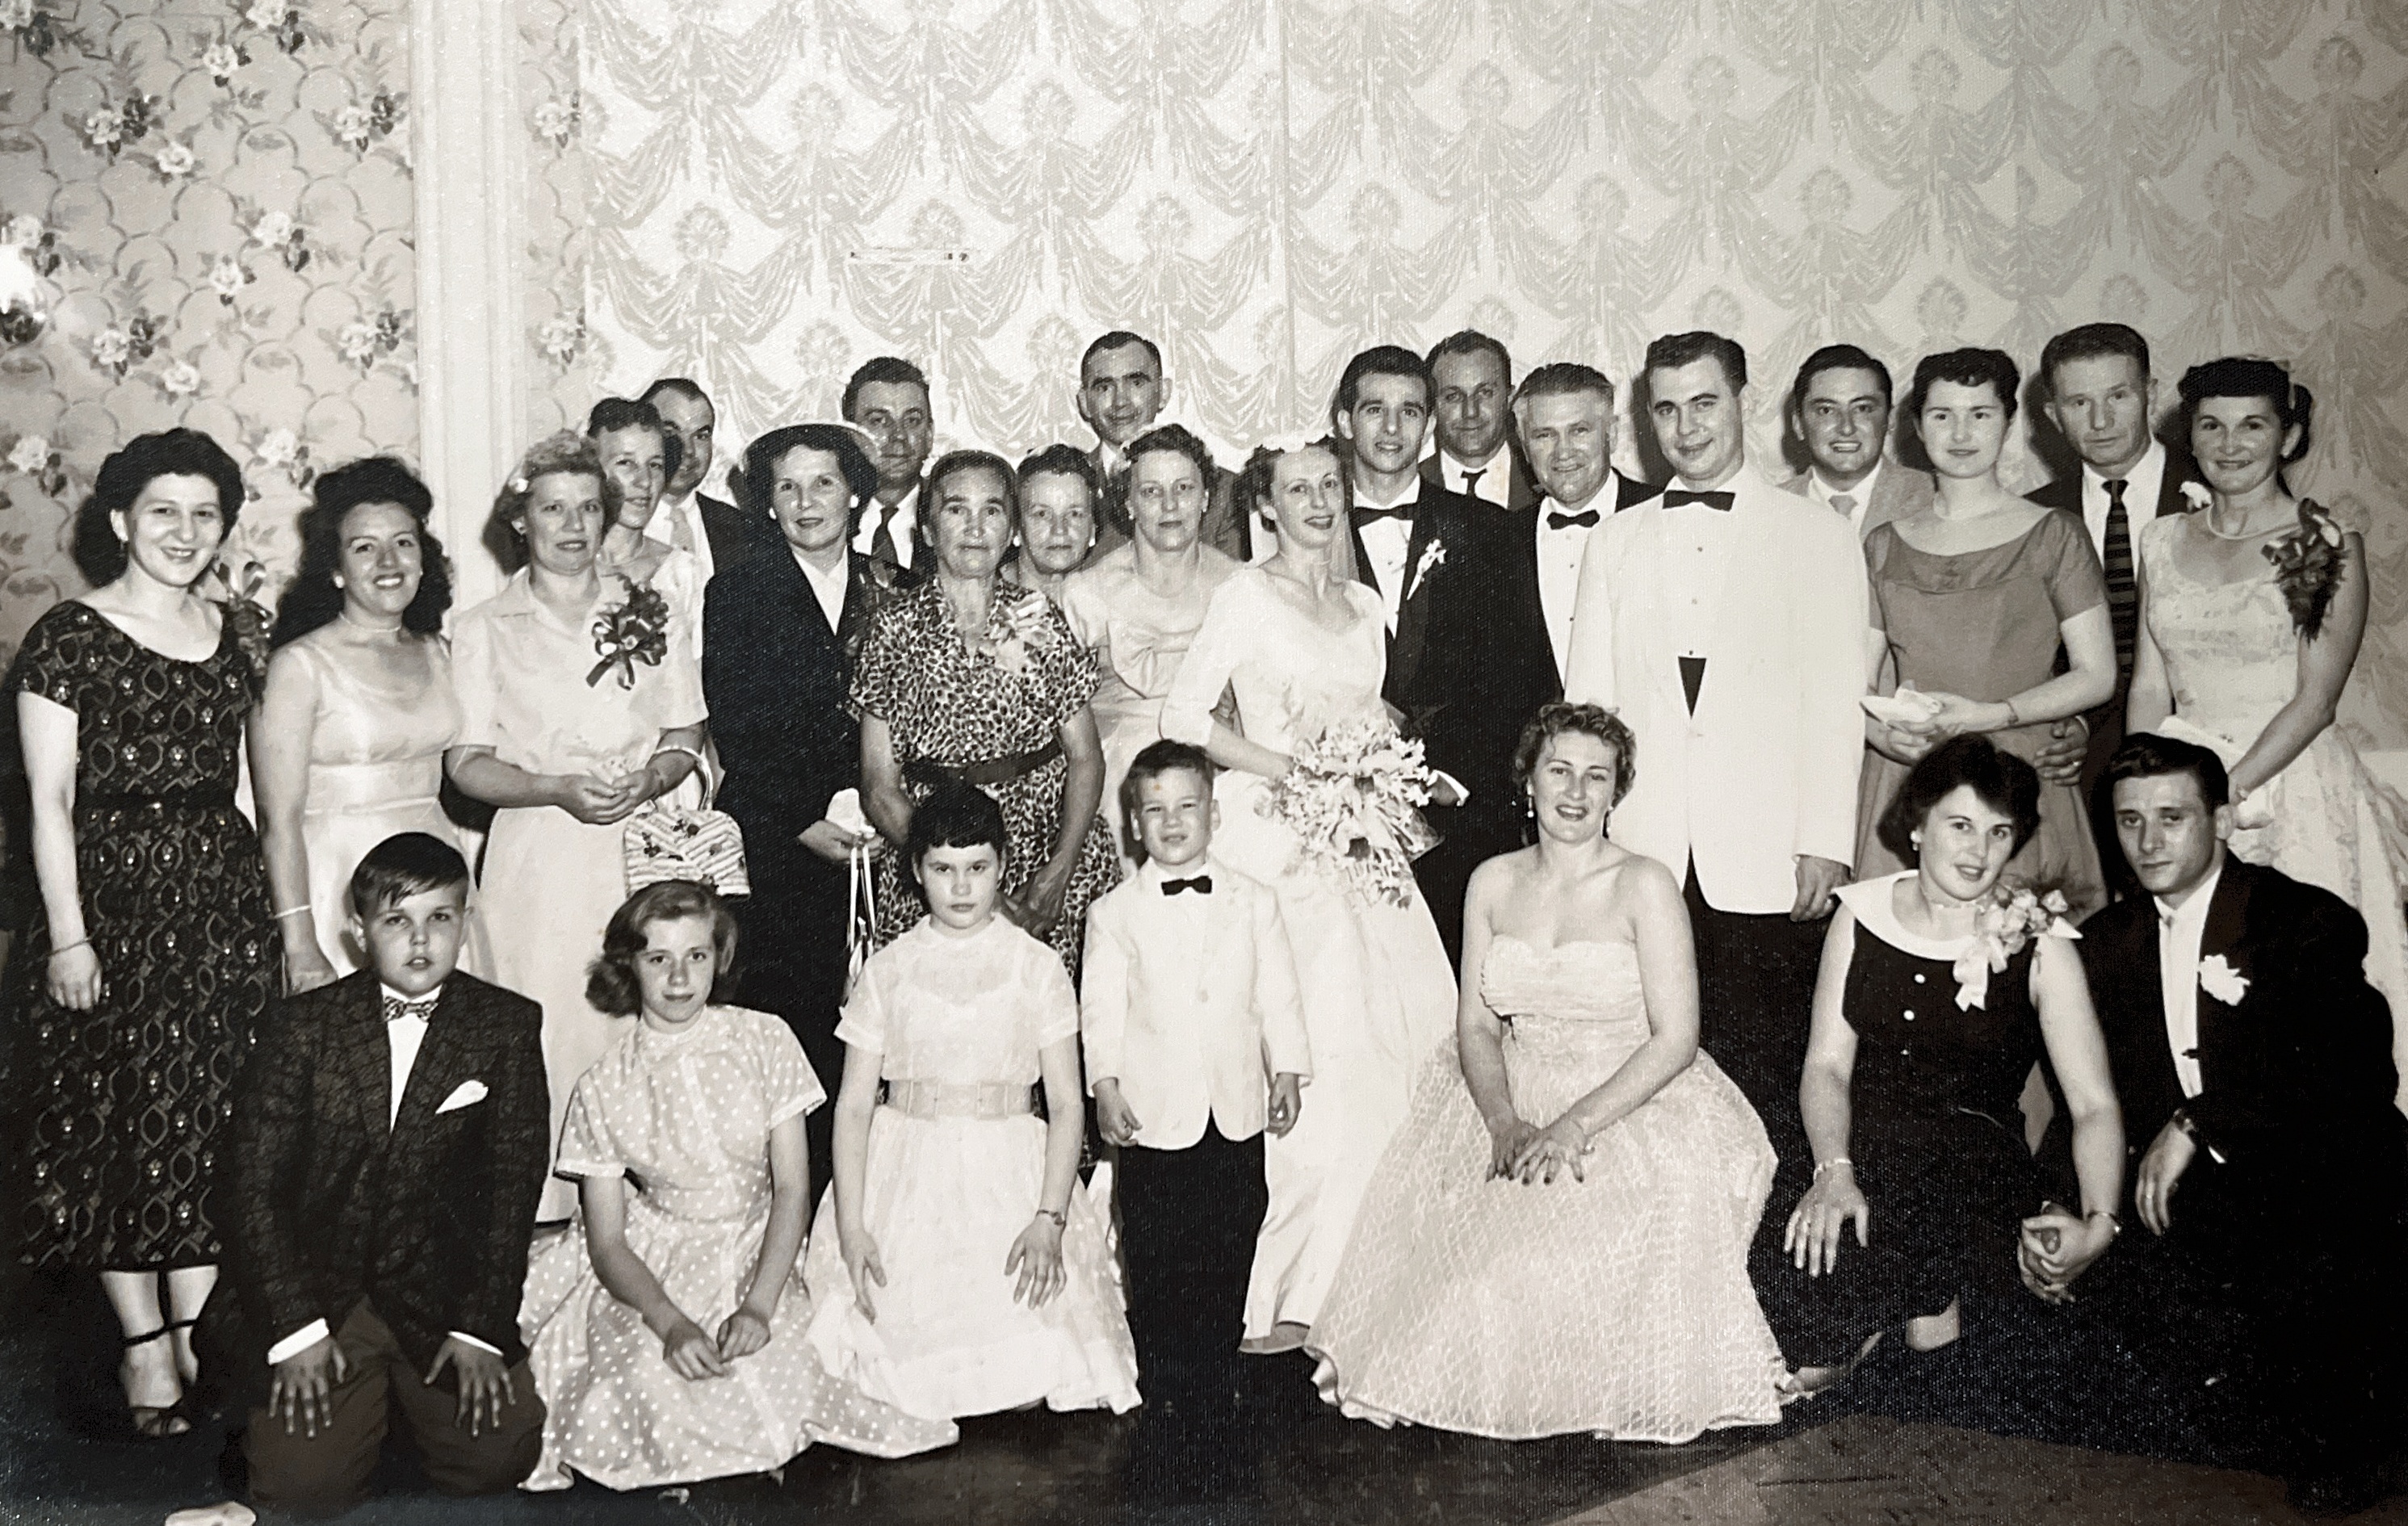 Jean & Paul’s wedding
June 1956